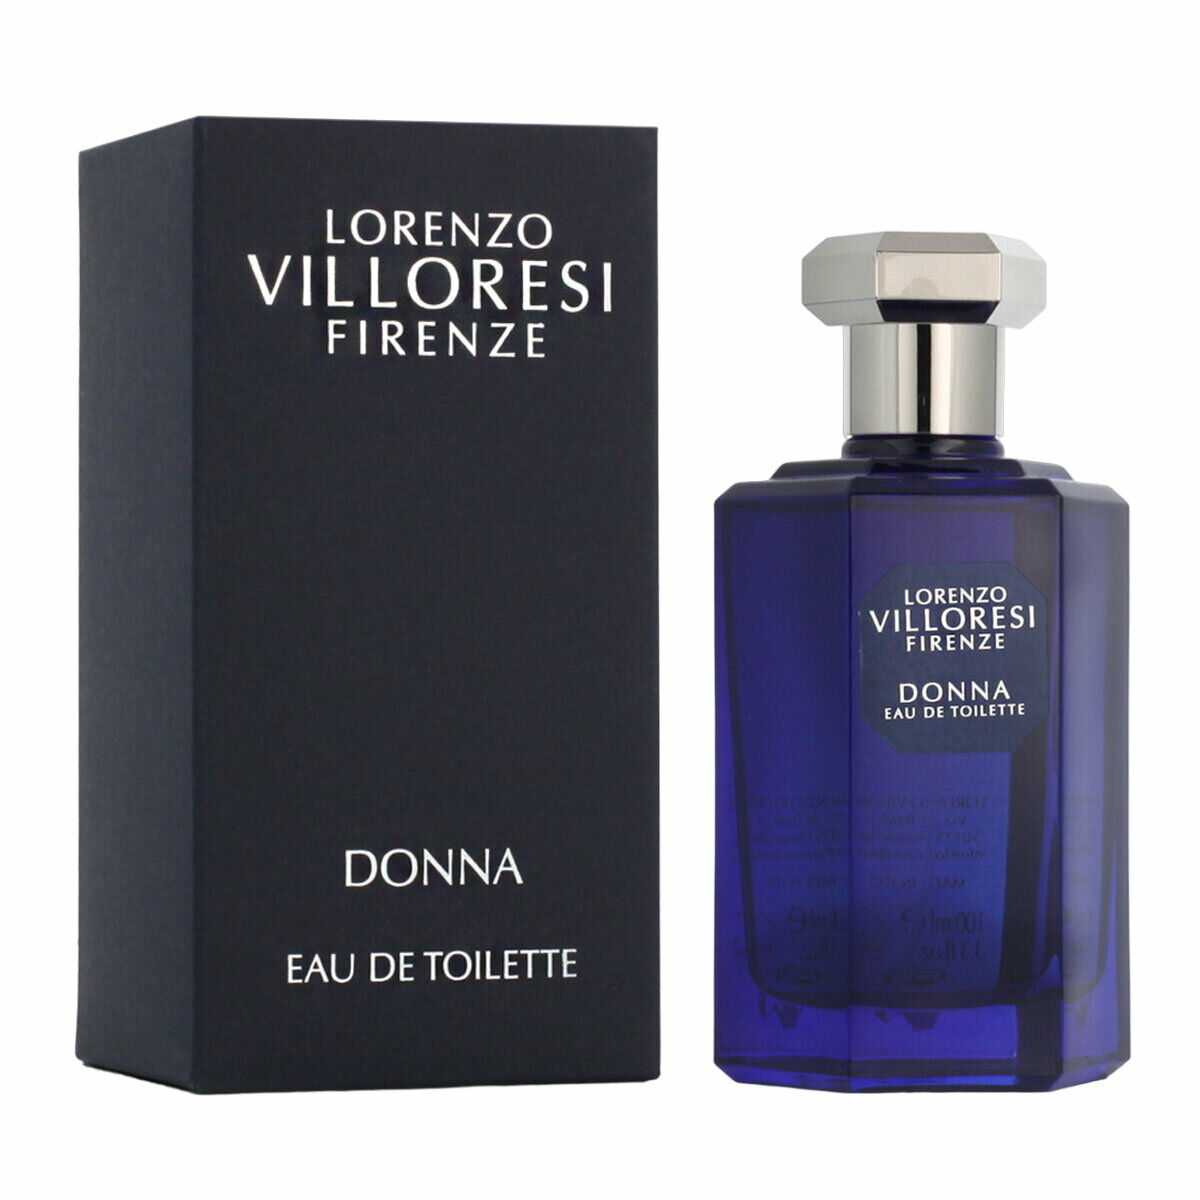 Uniseks Parfum Lorenzo Villoresi Firenze EDT Donna 100 ml